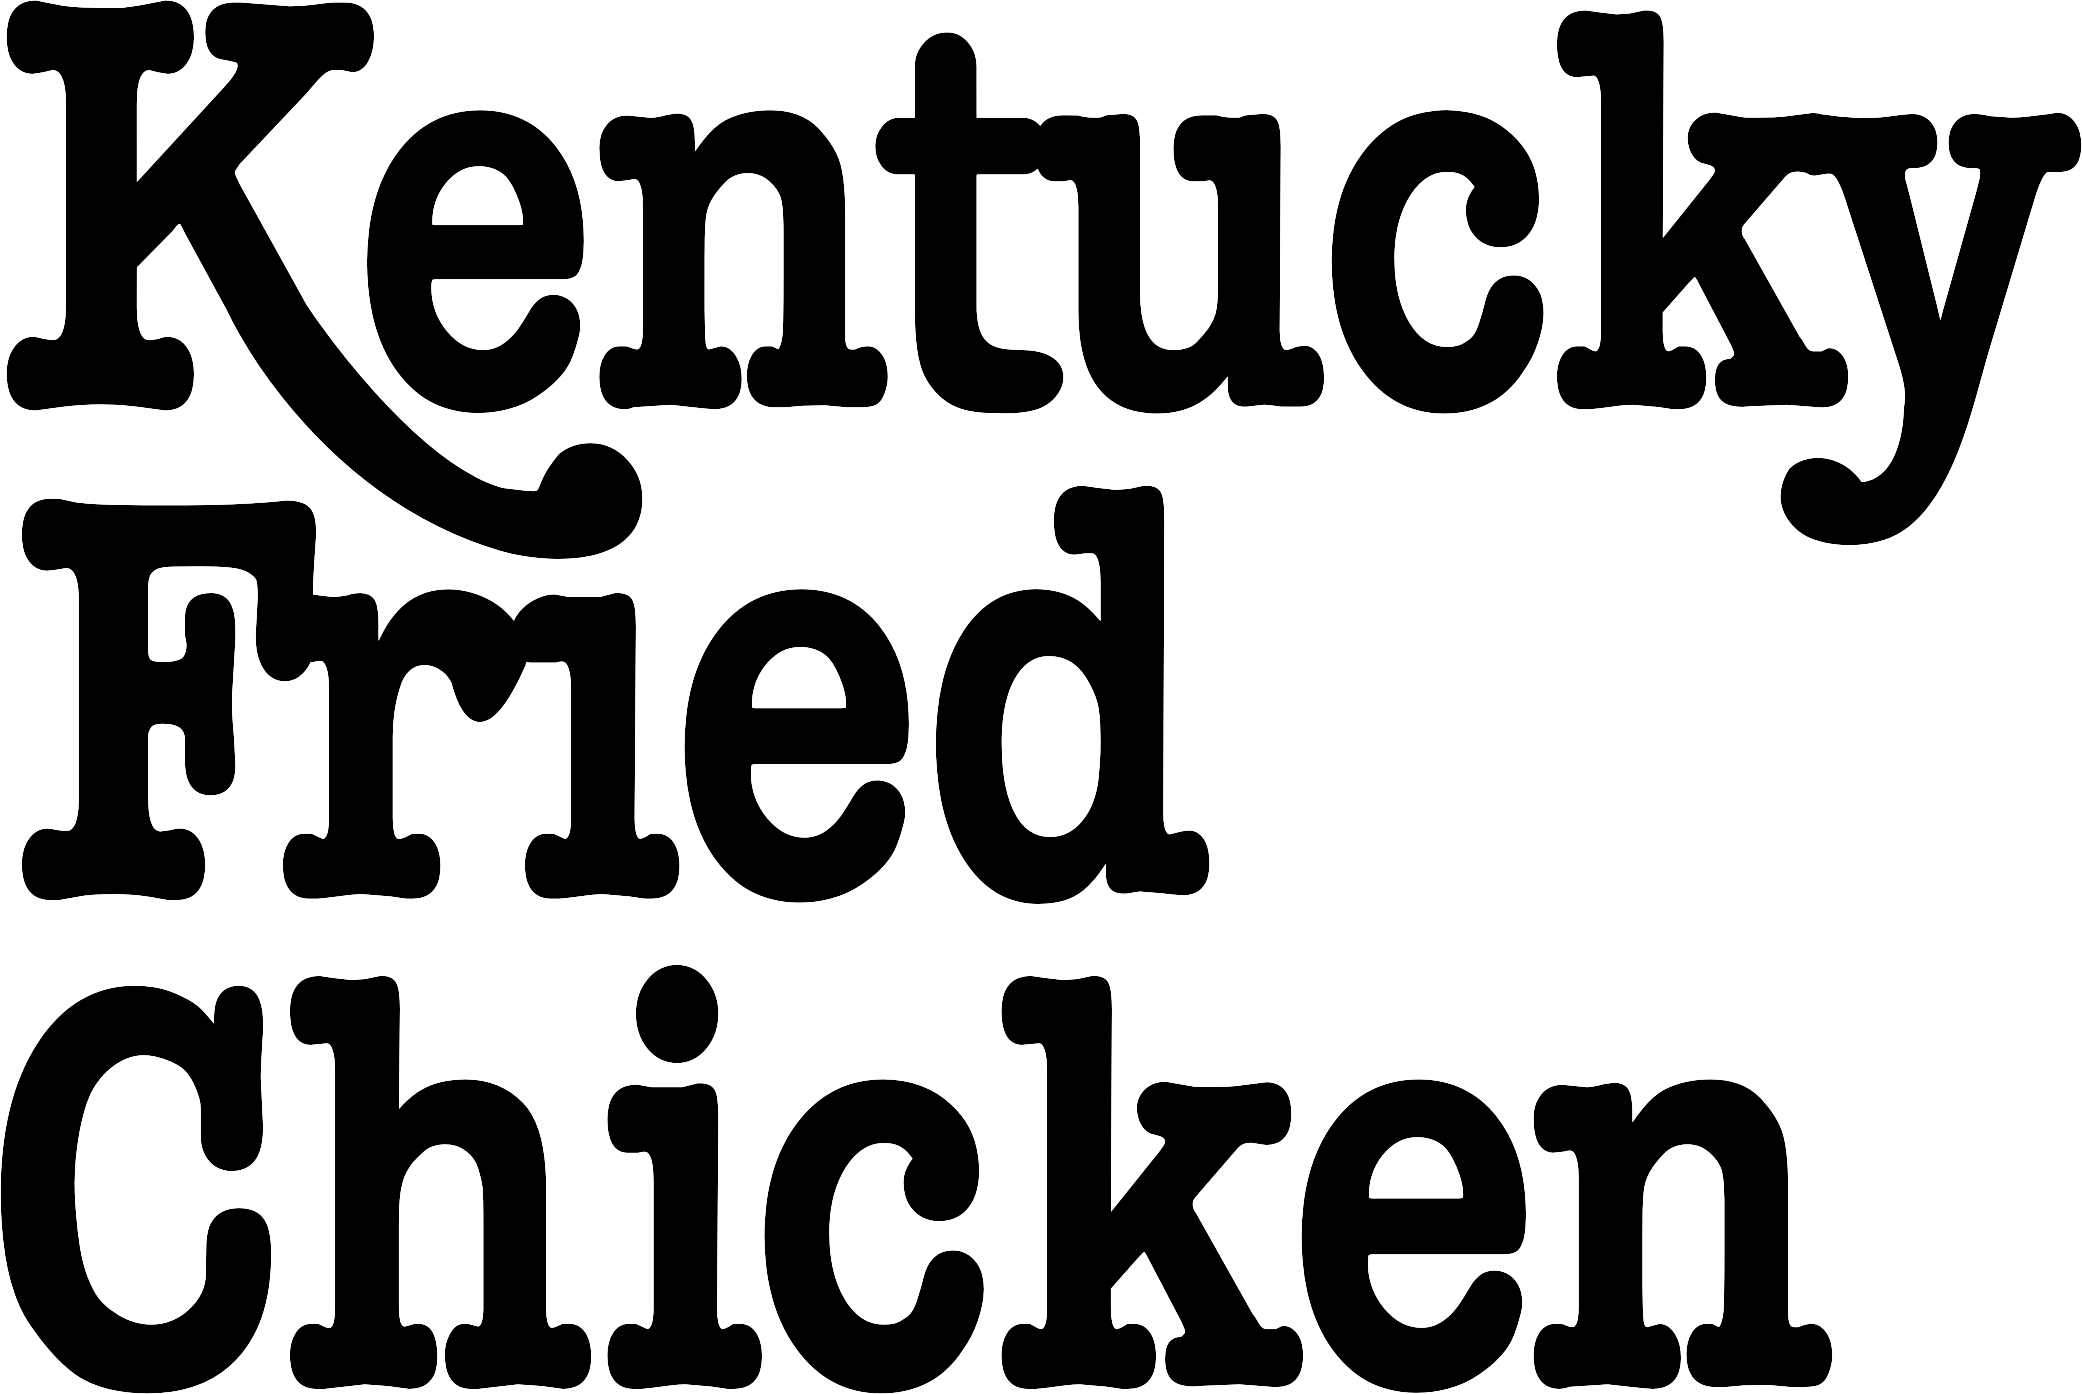 Old KFC Logo - Image - KFC old logo.png | Logopedia | FANDOM powered by Wikia